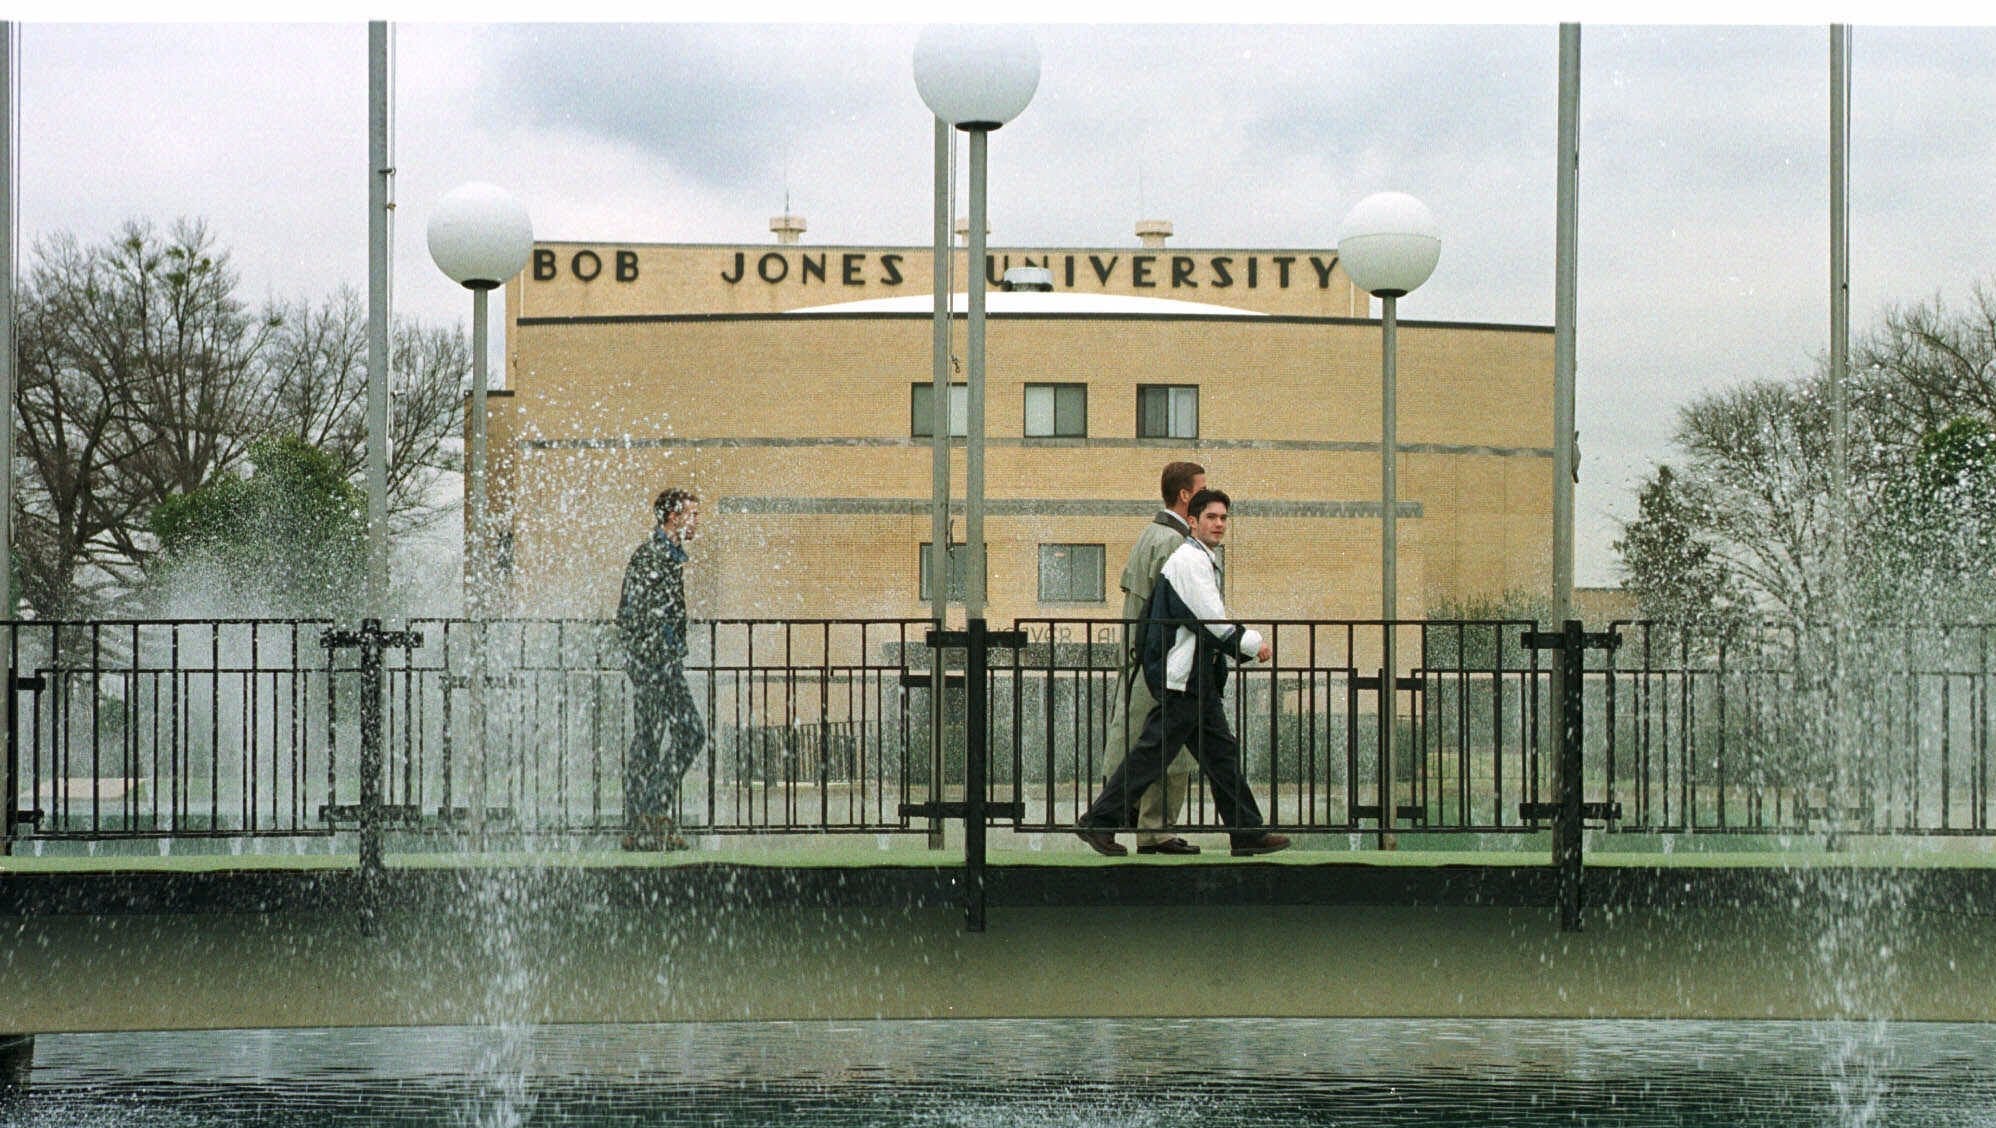 in-1947-bob-jones-university-opened-with-modern-facilities